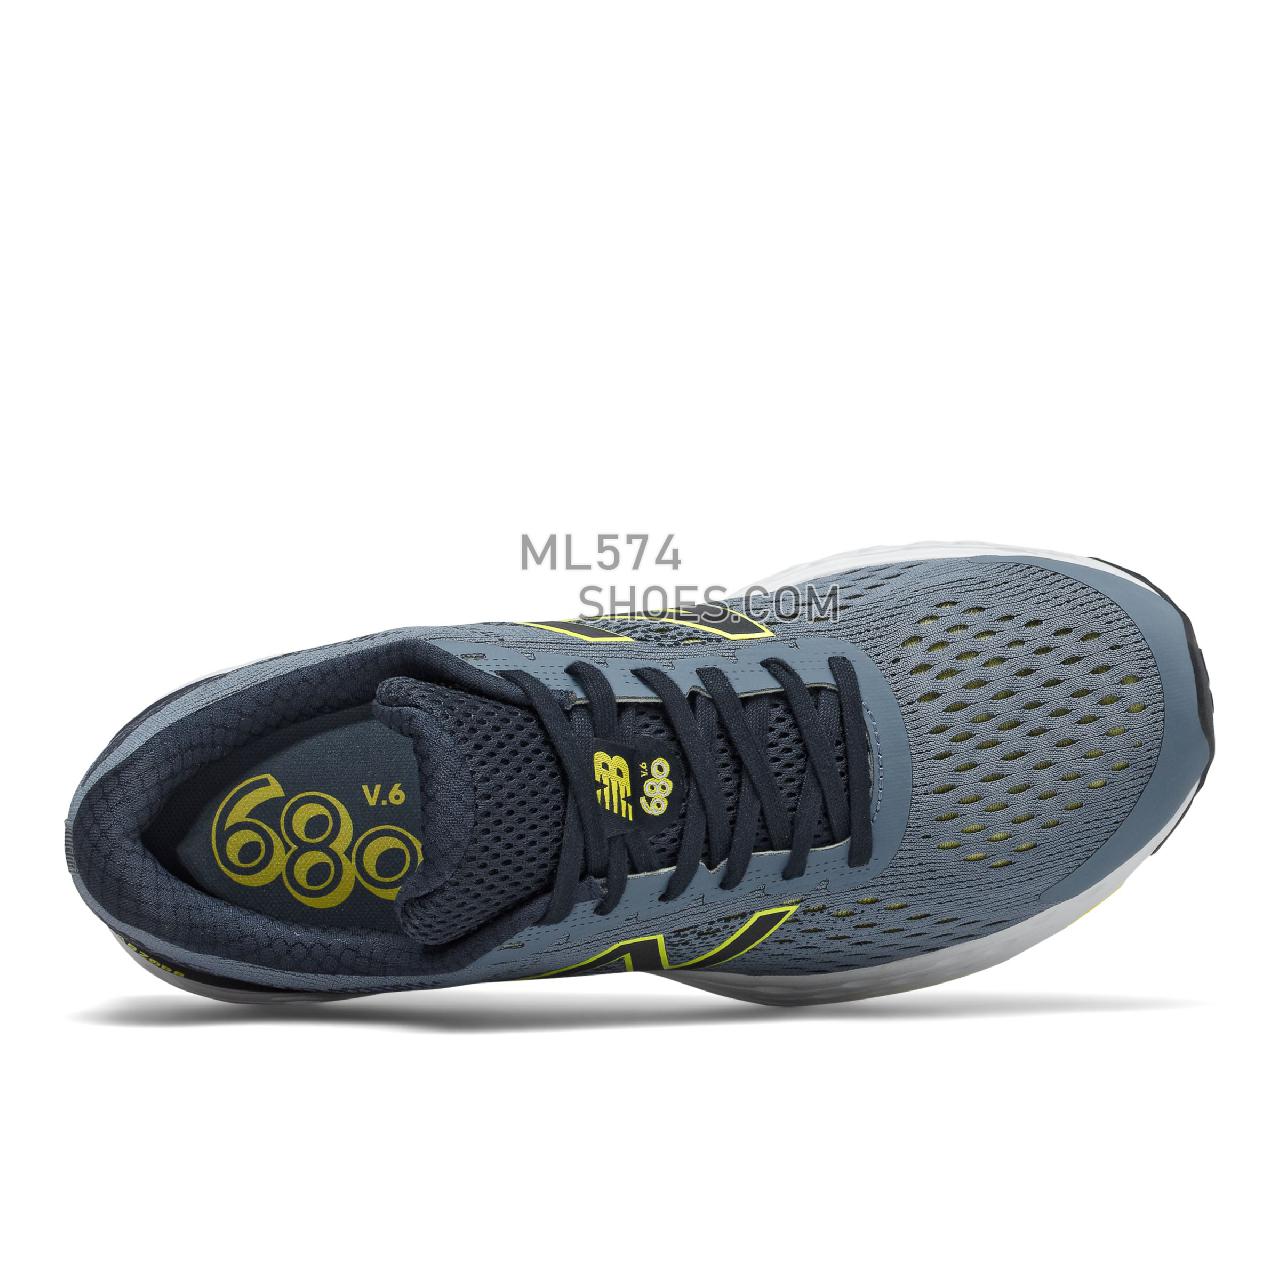 New Balance 680v6 - Men's Classic Sneakers - Grey with Black and Lemon Slush - M680RG6